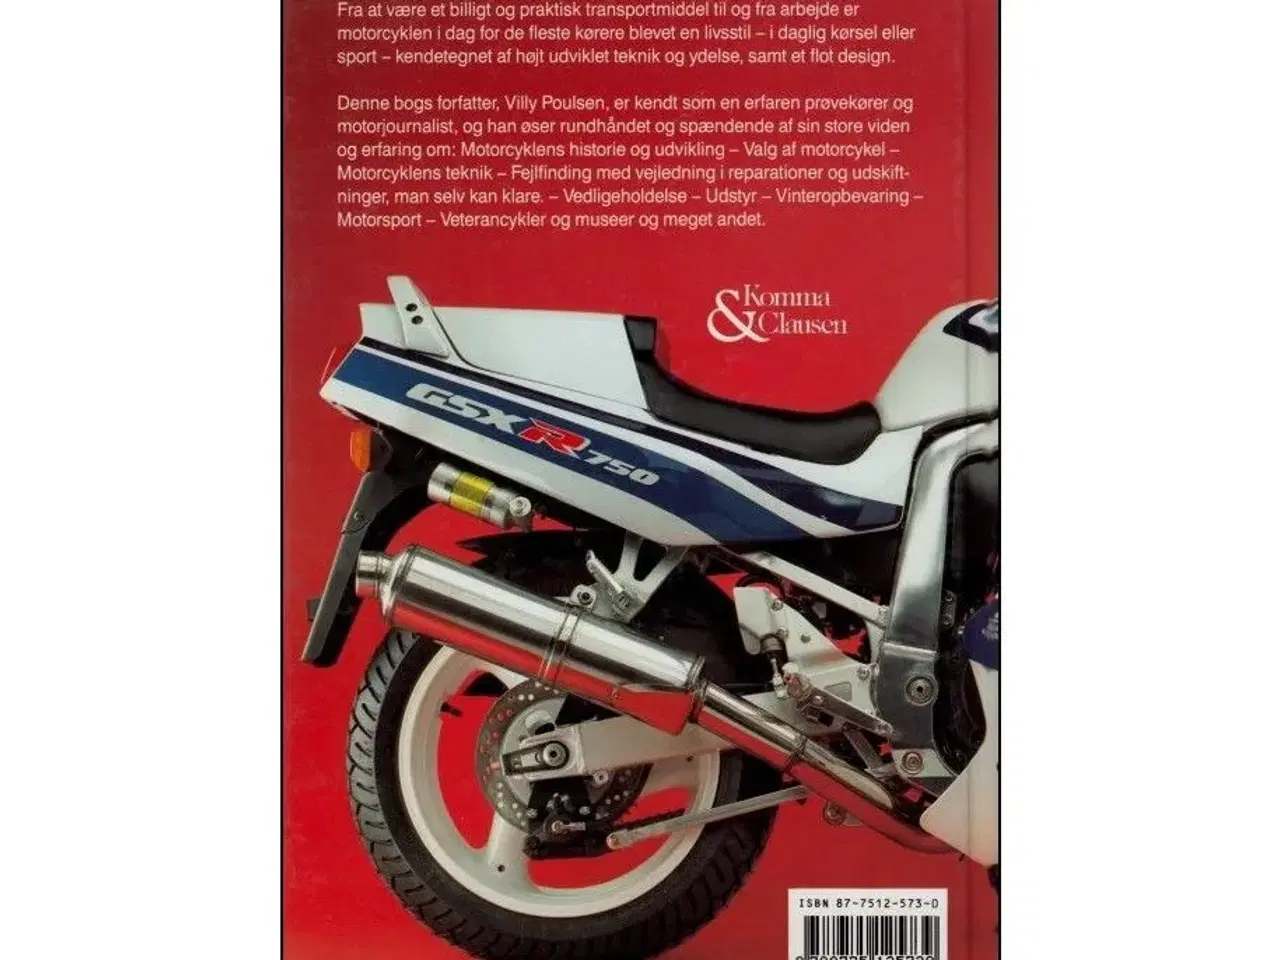 Billede 2 - Bog: Min Motorcykel